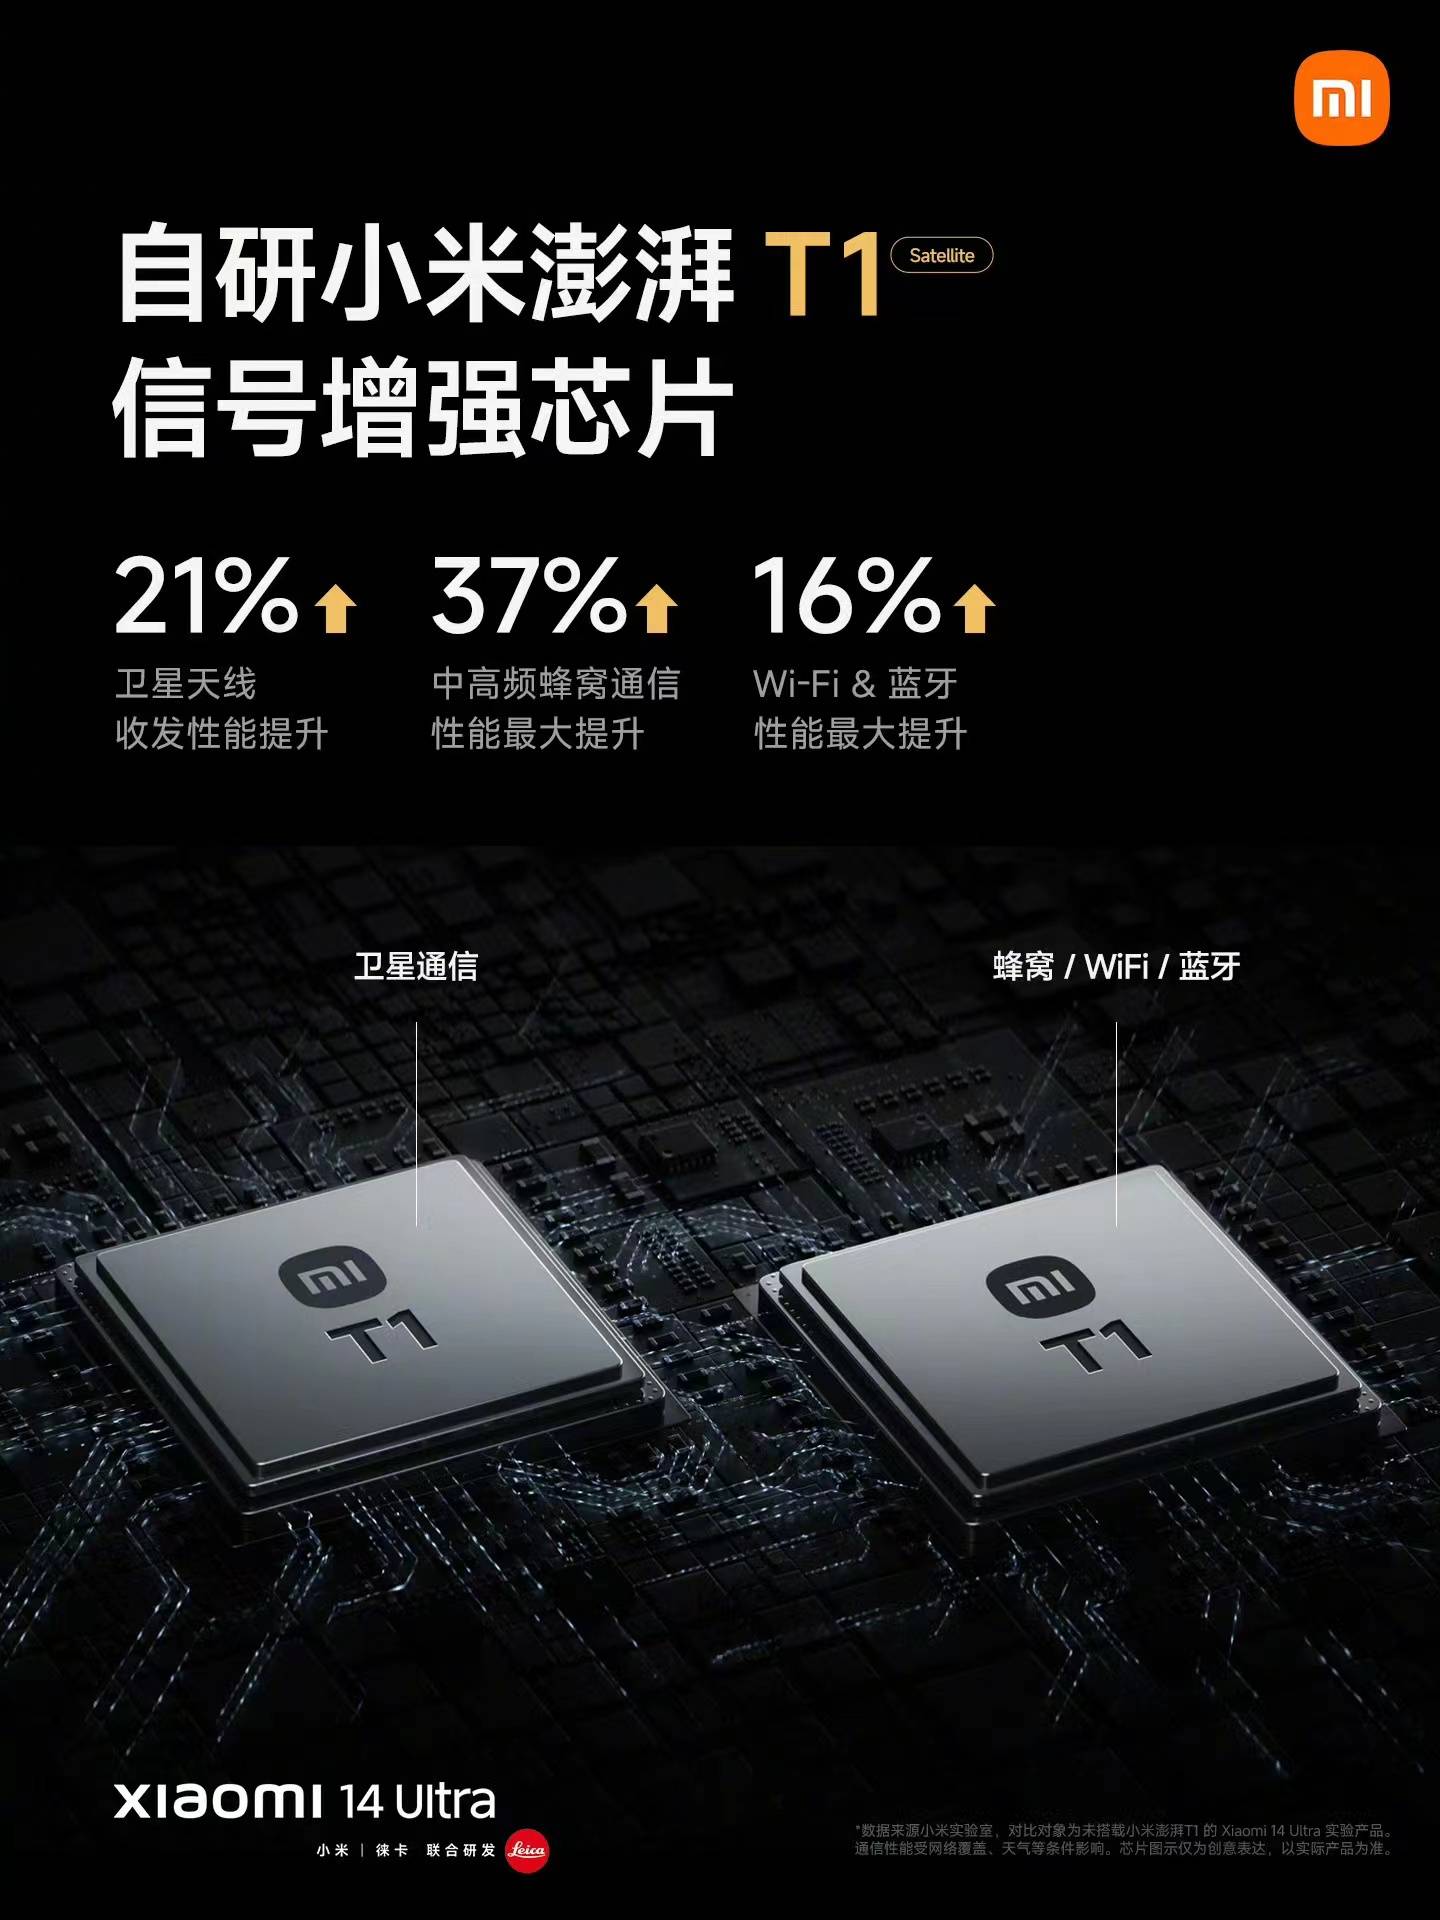 Xiaomi 14 Ultra Smartphone Features